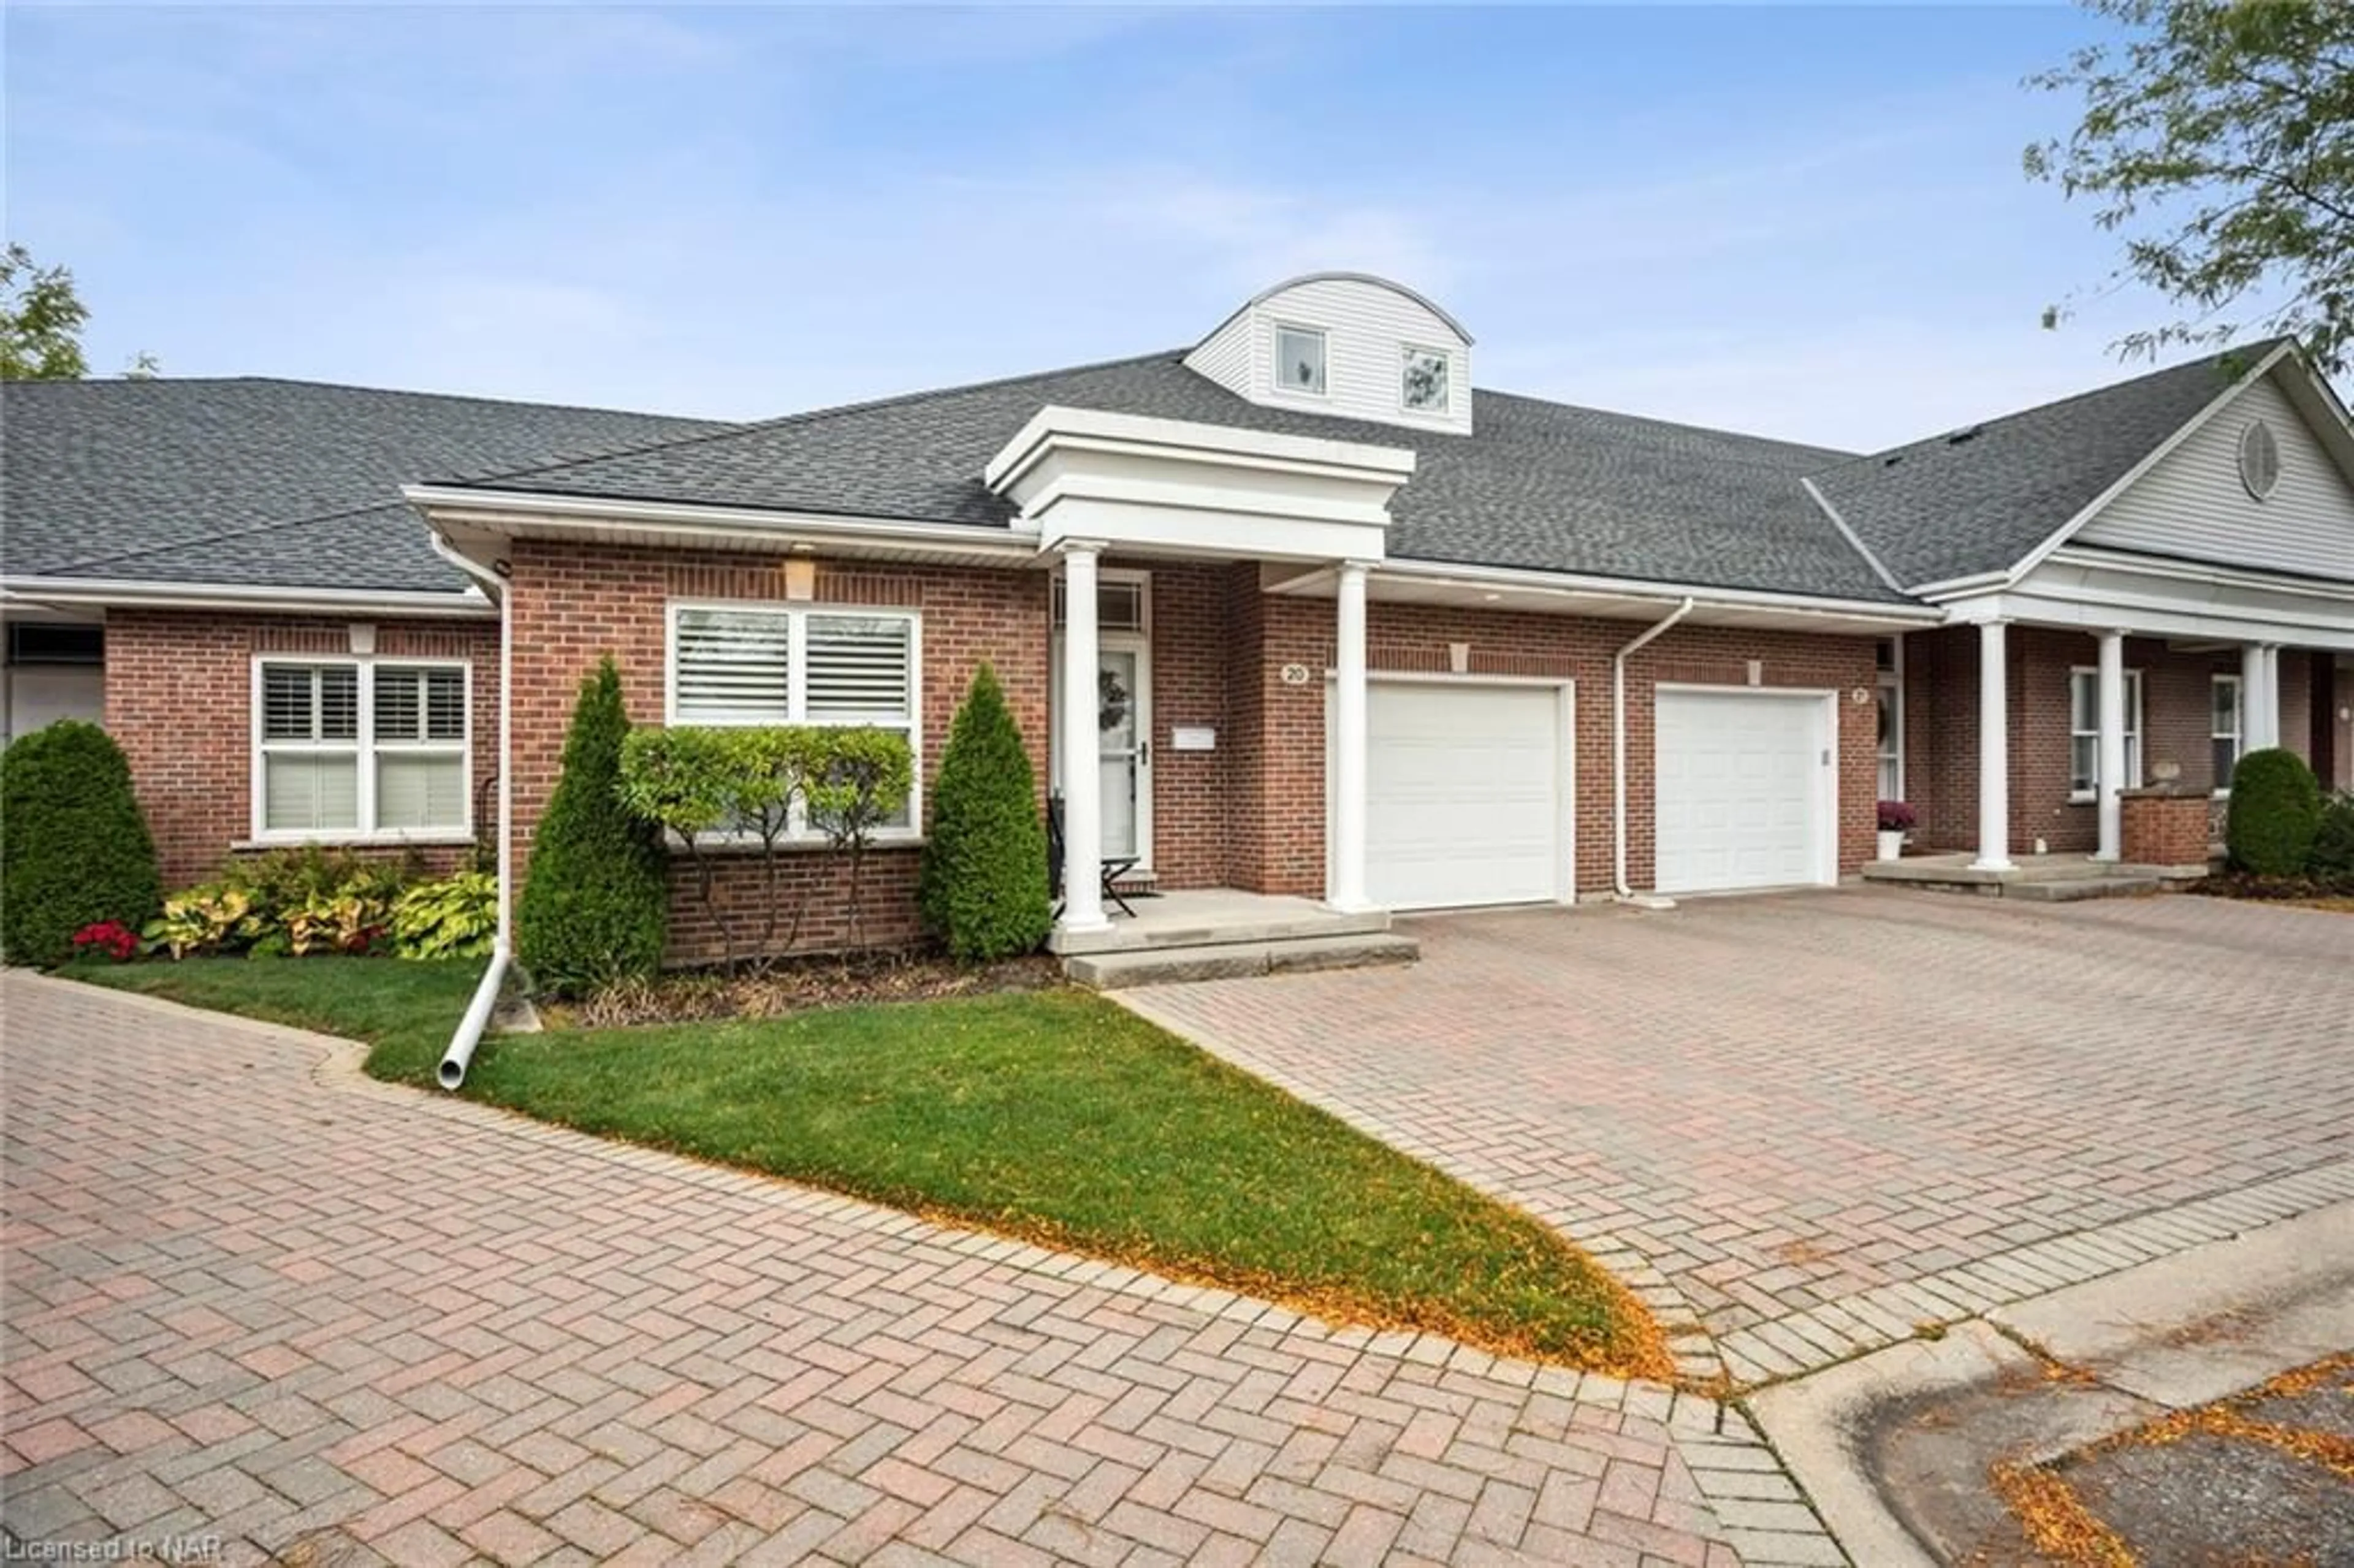 Home with brick exterior material for 3381 Montrose Rd #20, Niagara Falls Ontario L2H 0J9